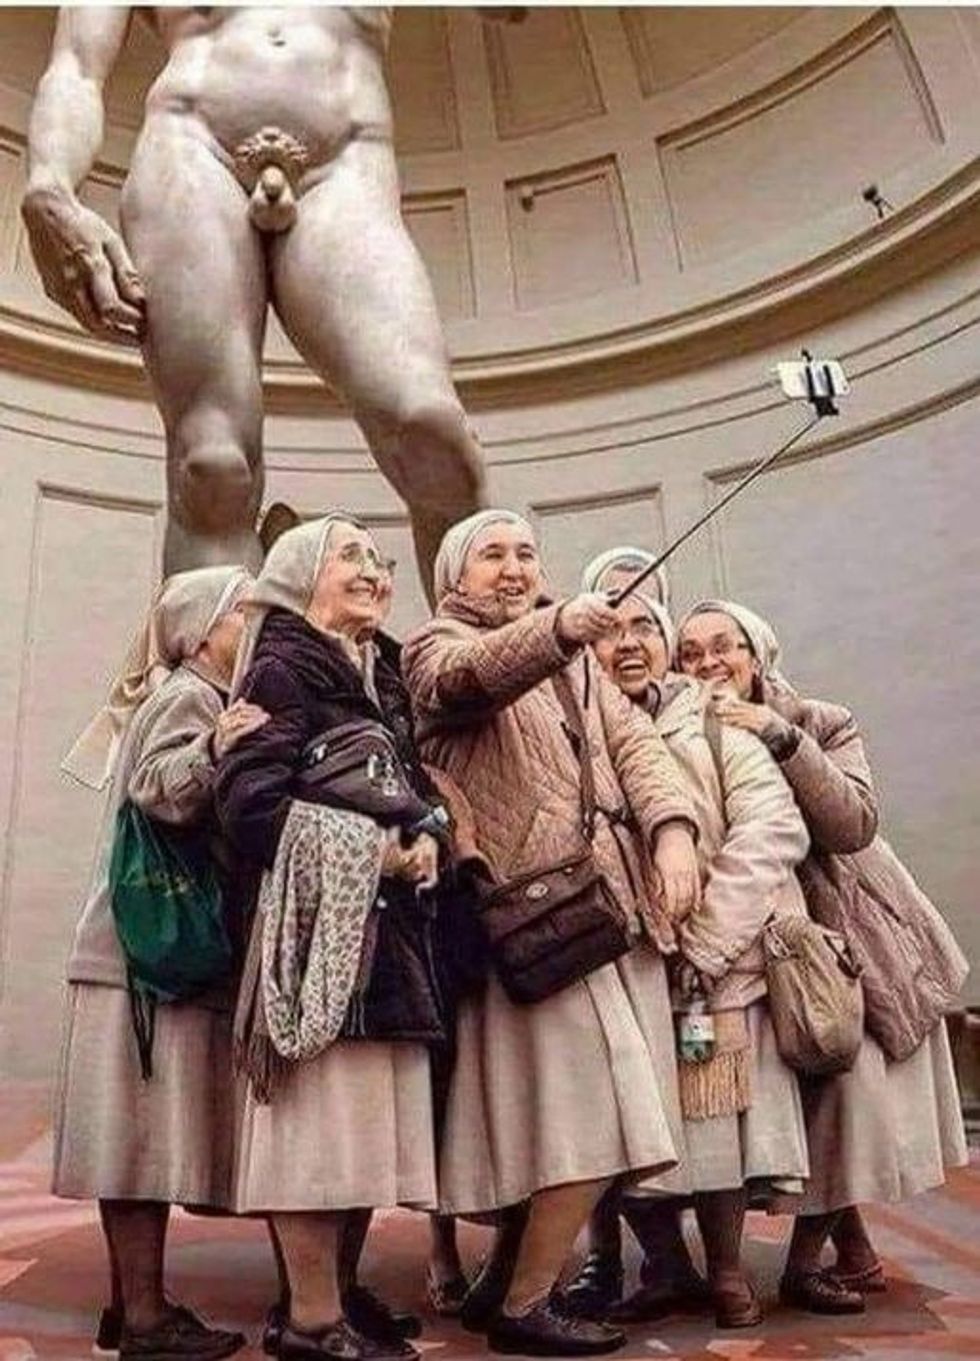 Nuns take selfies in front of Michelangelo's David